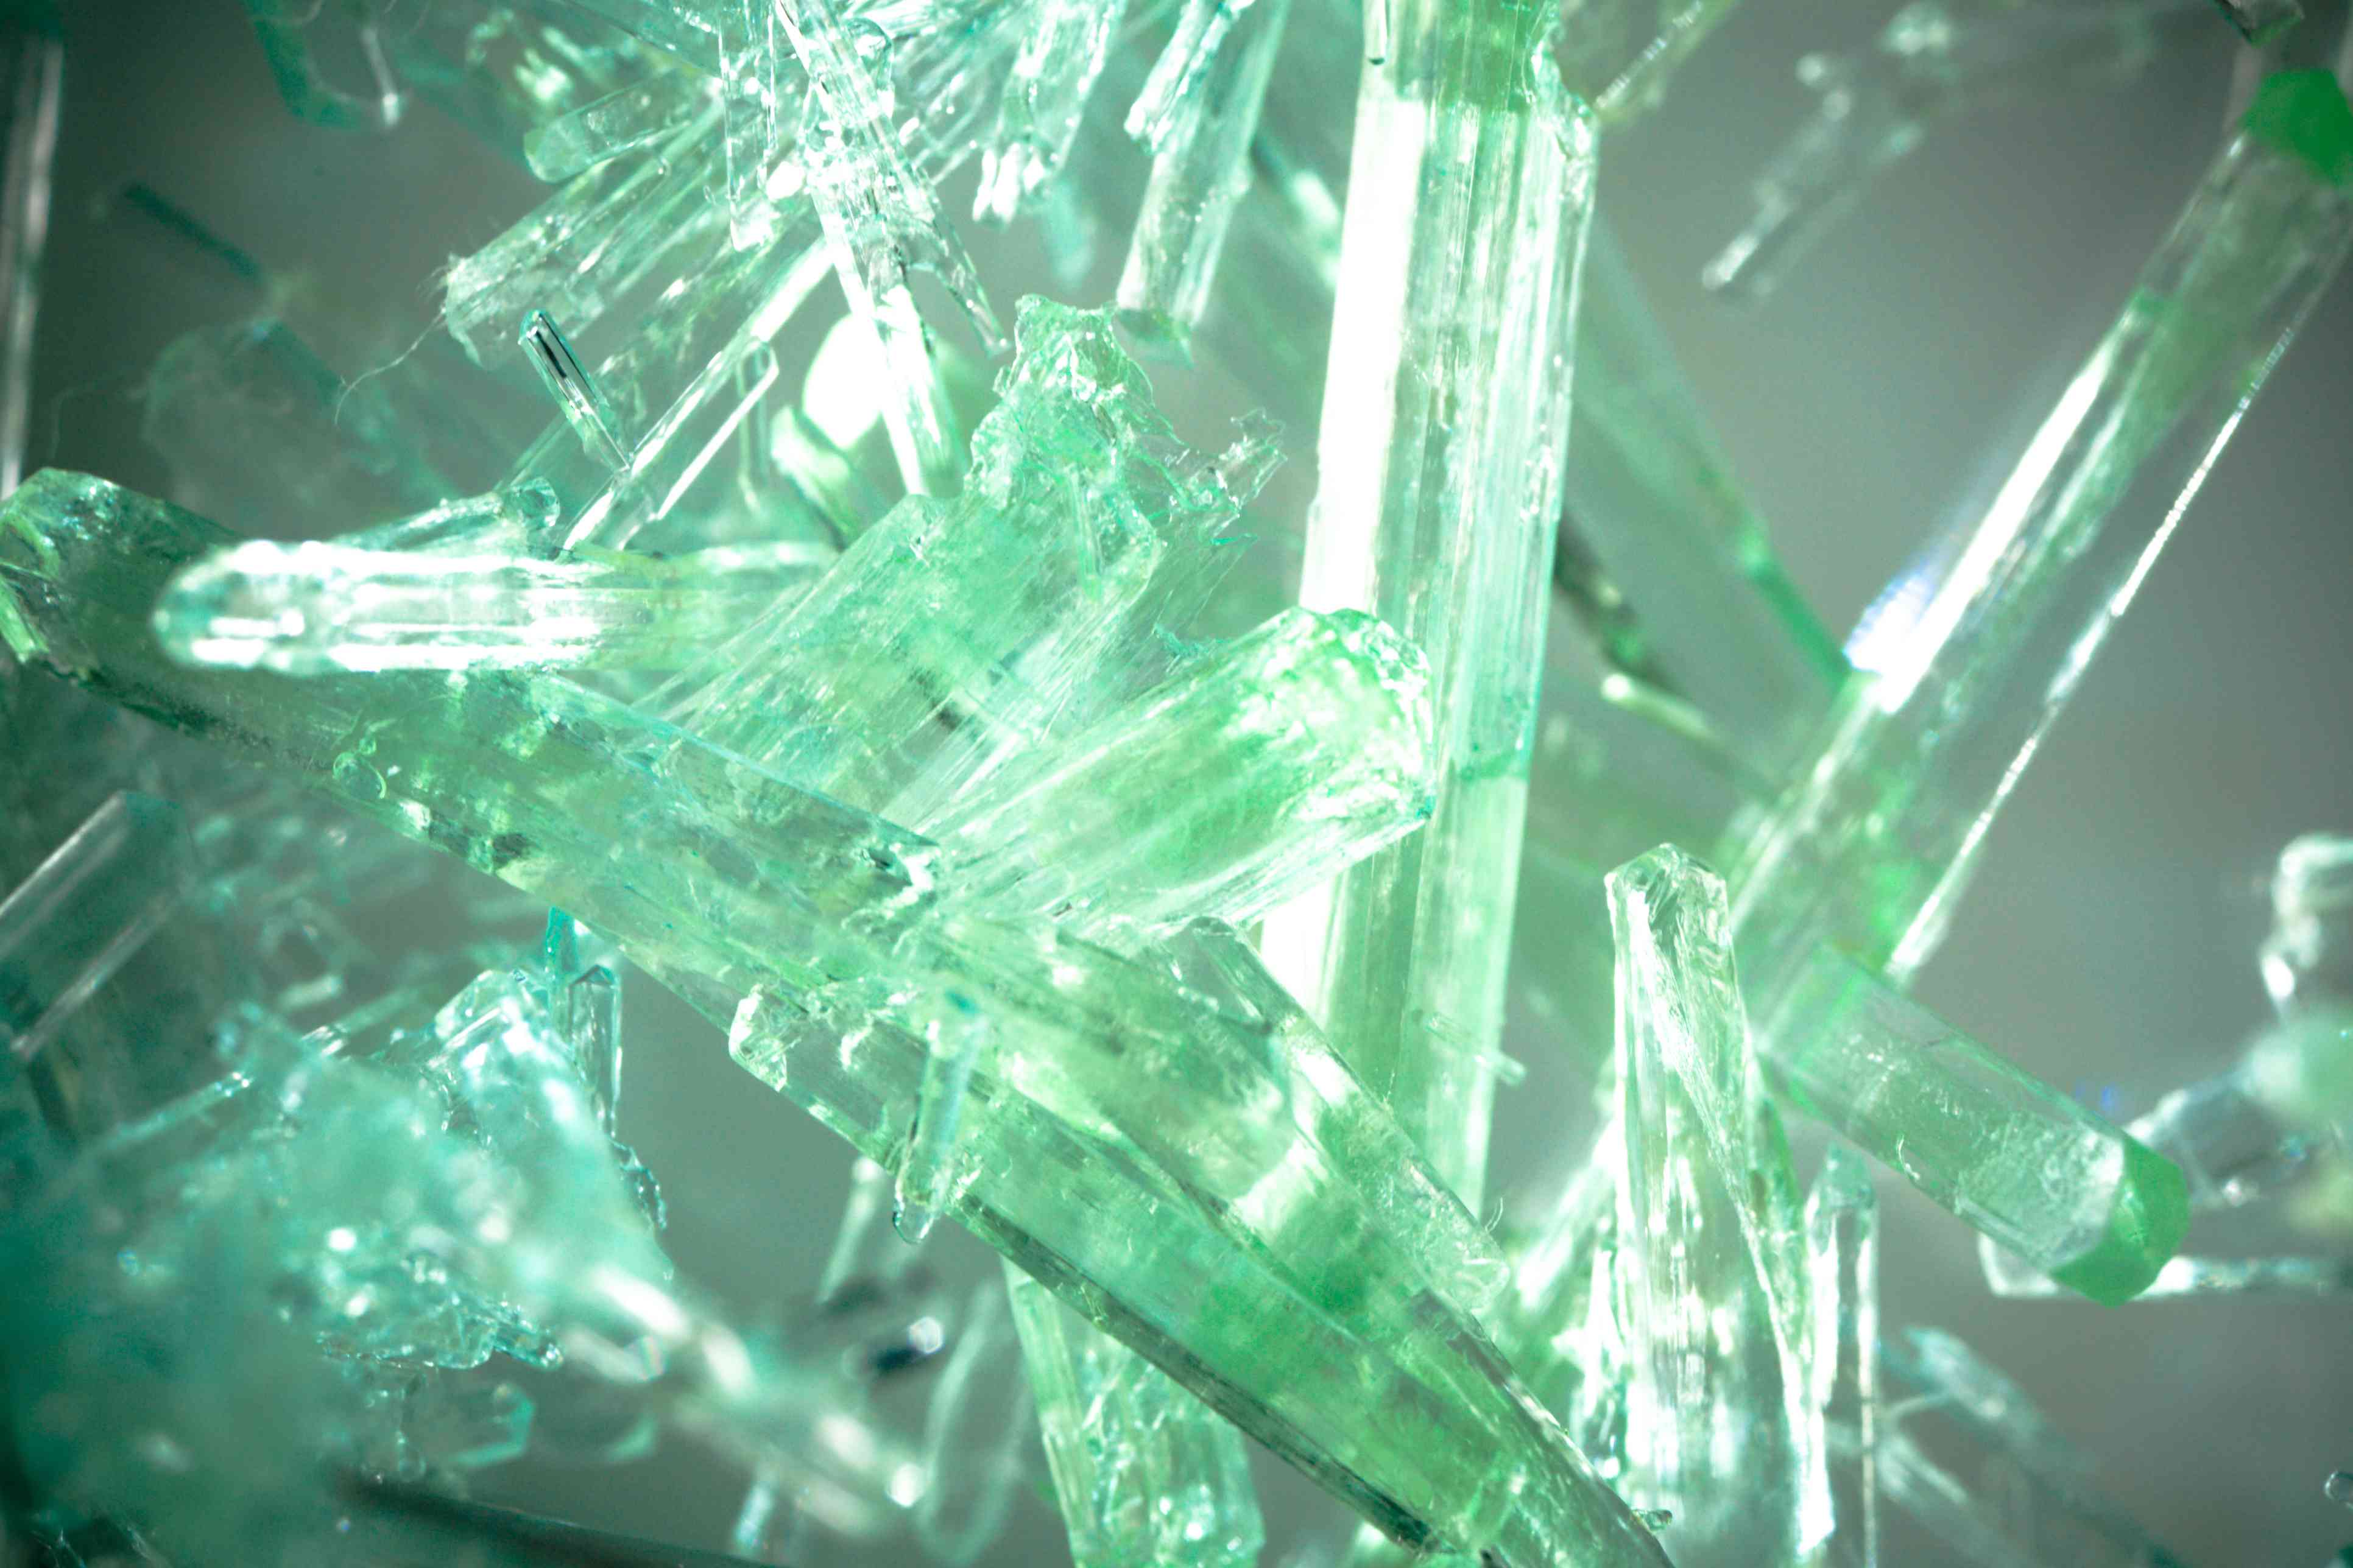 Green colored epsom salt crystals